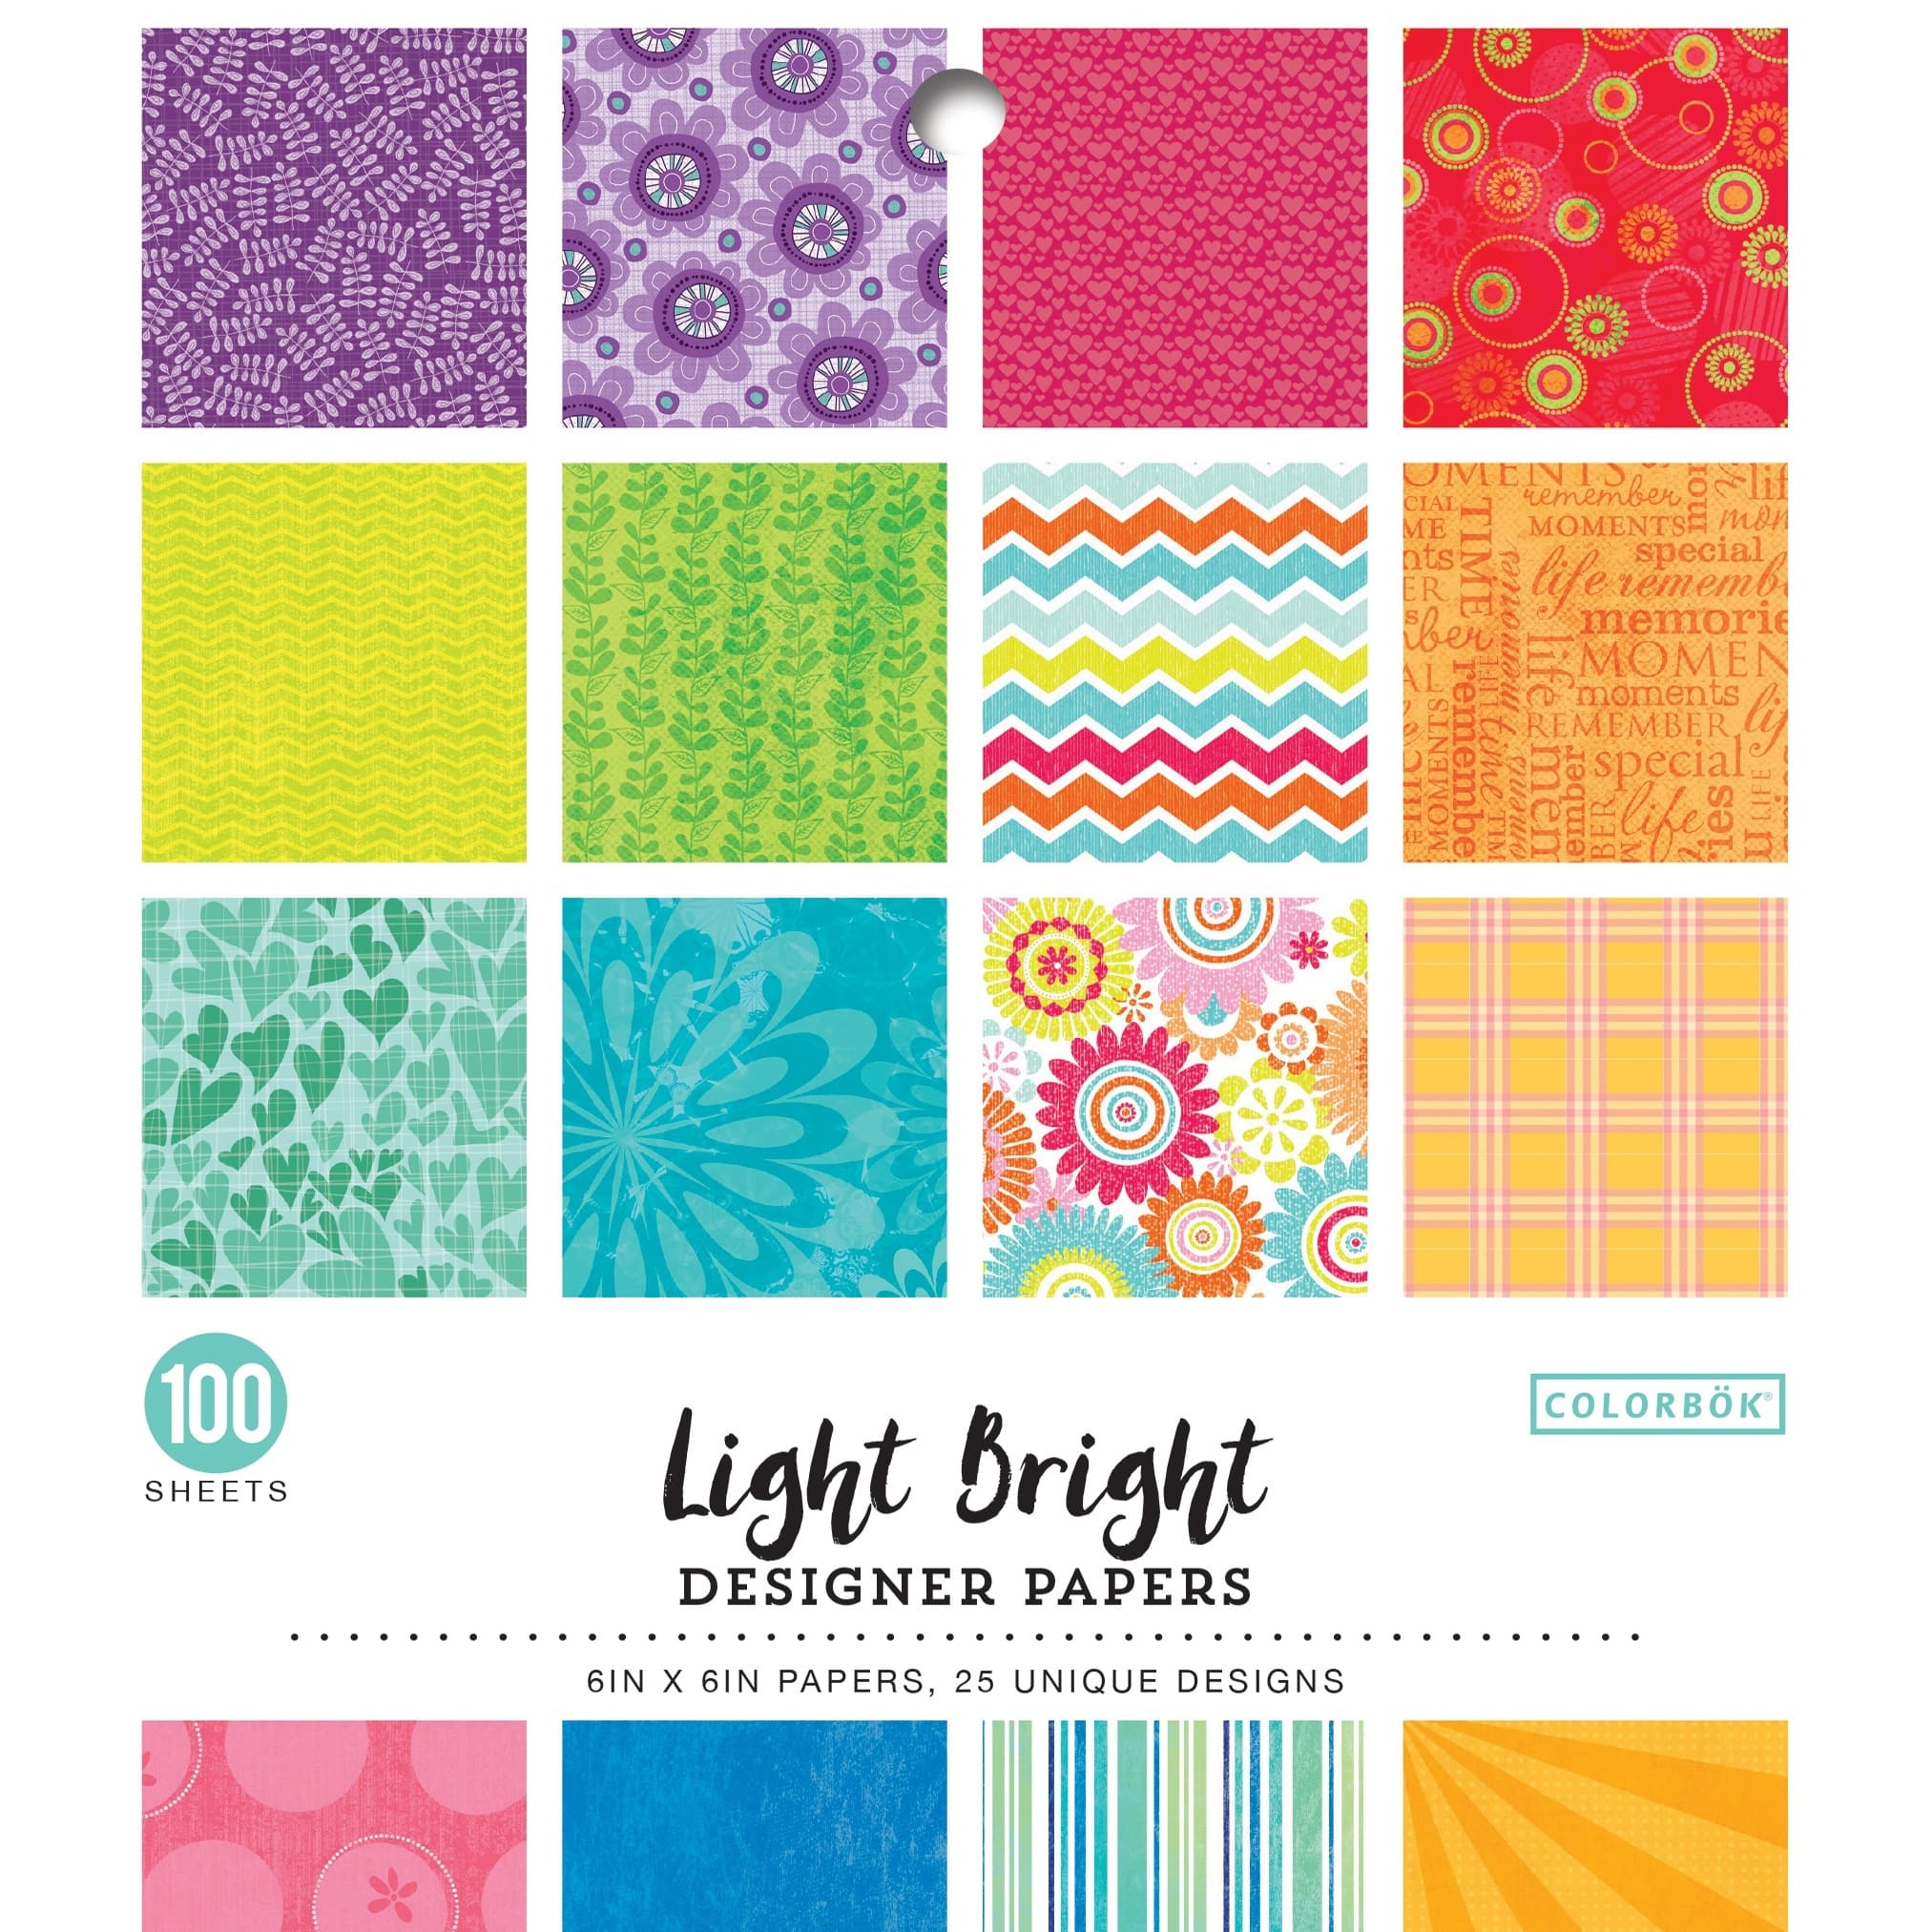 2 NEW Colorbok Designer Paper for Scrapbooking Light Bright & Mod